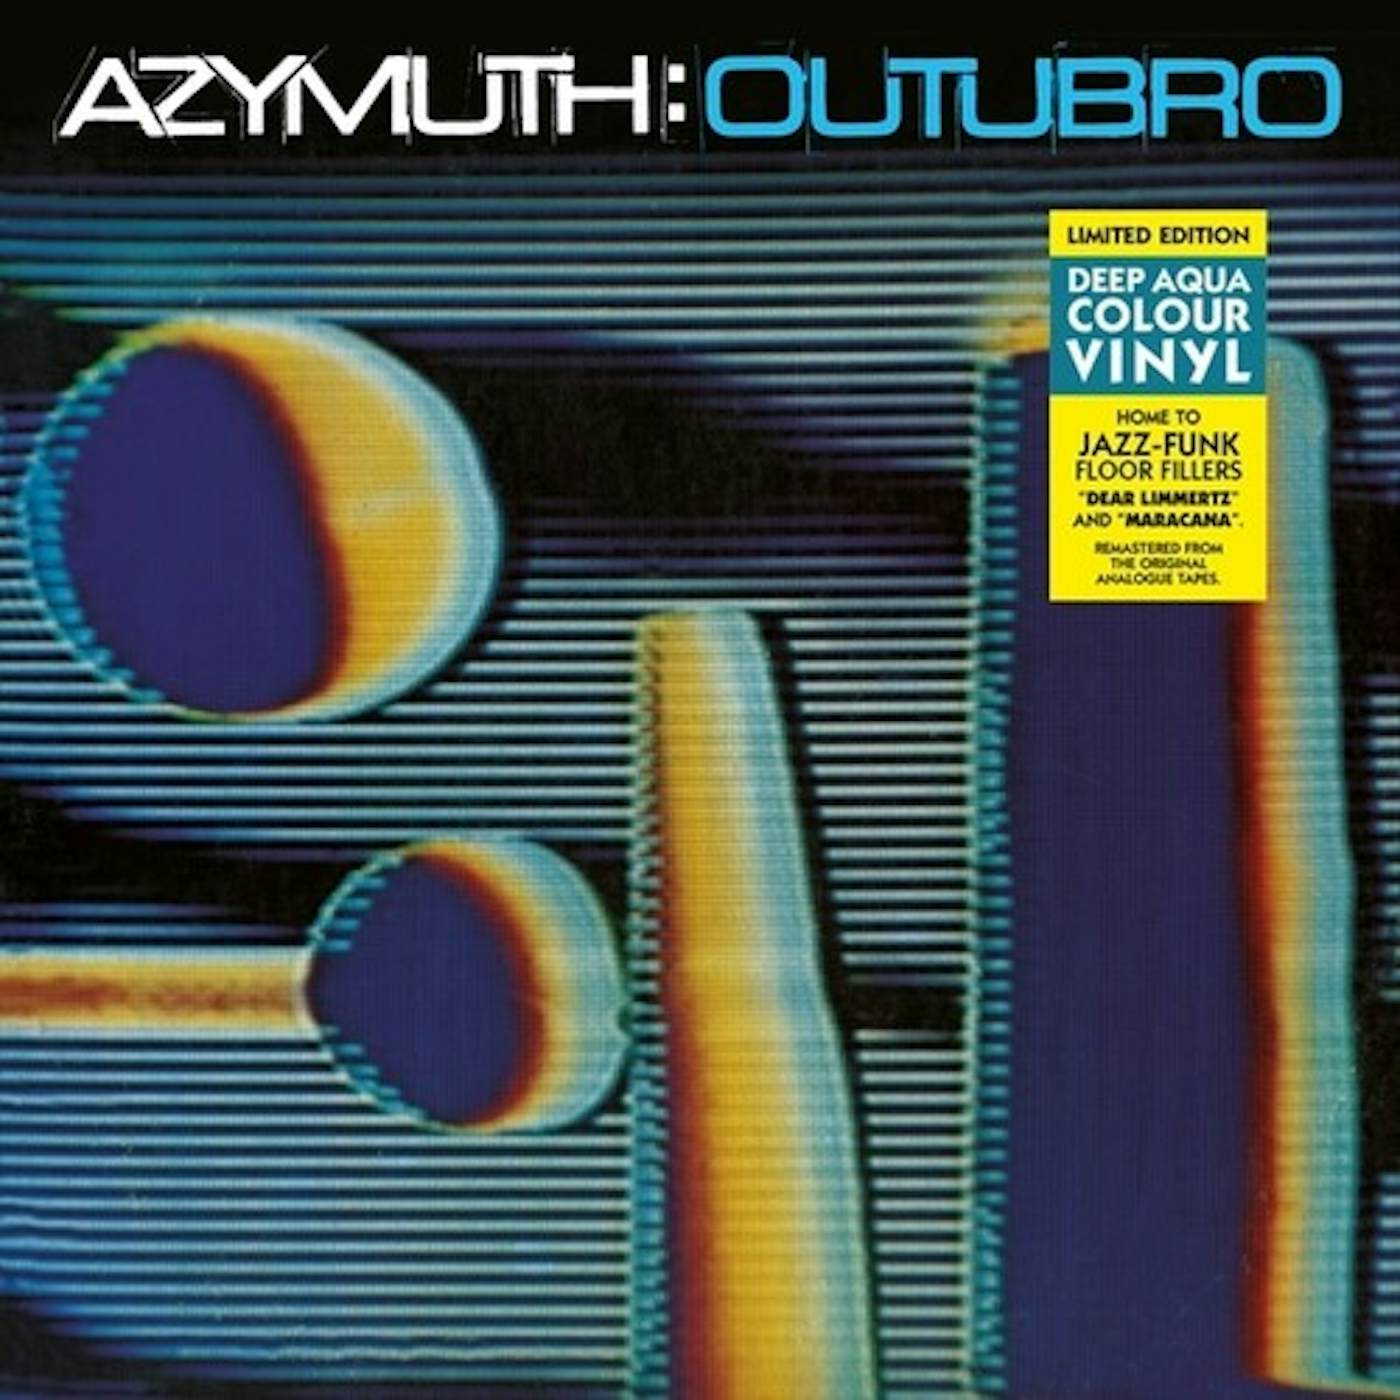 Azymuth OUTUBRO Vinyl Record